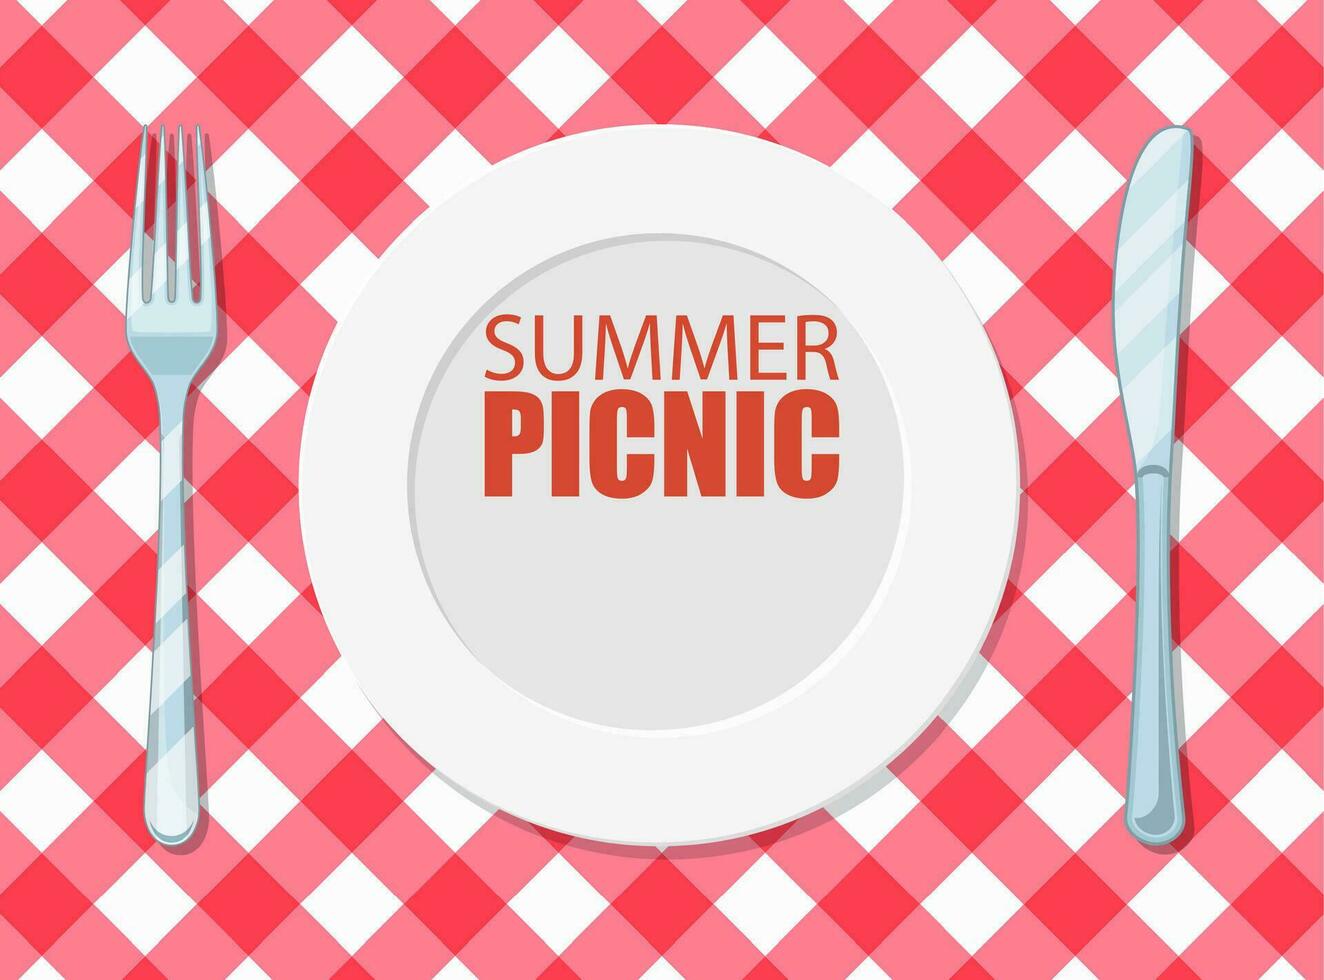 summer picnic design, invitation card, Banner, poster design template. Vector illustration in flat style